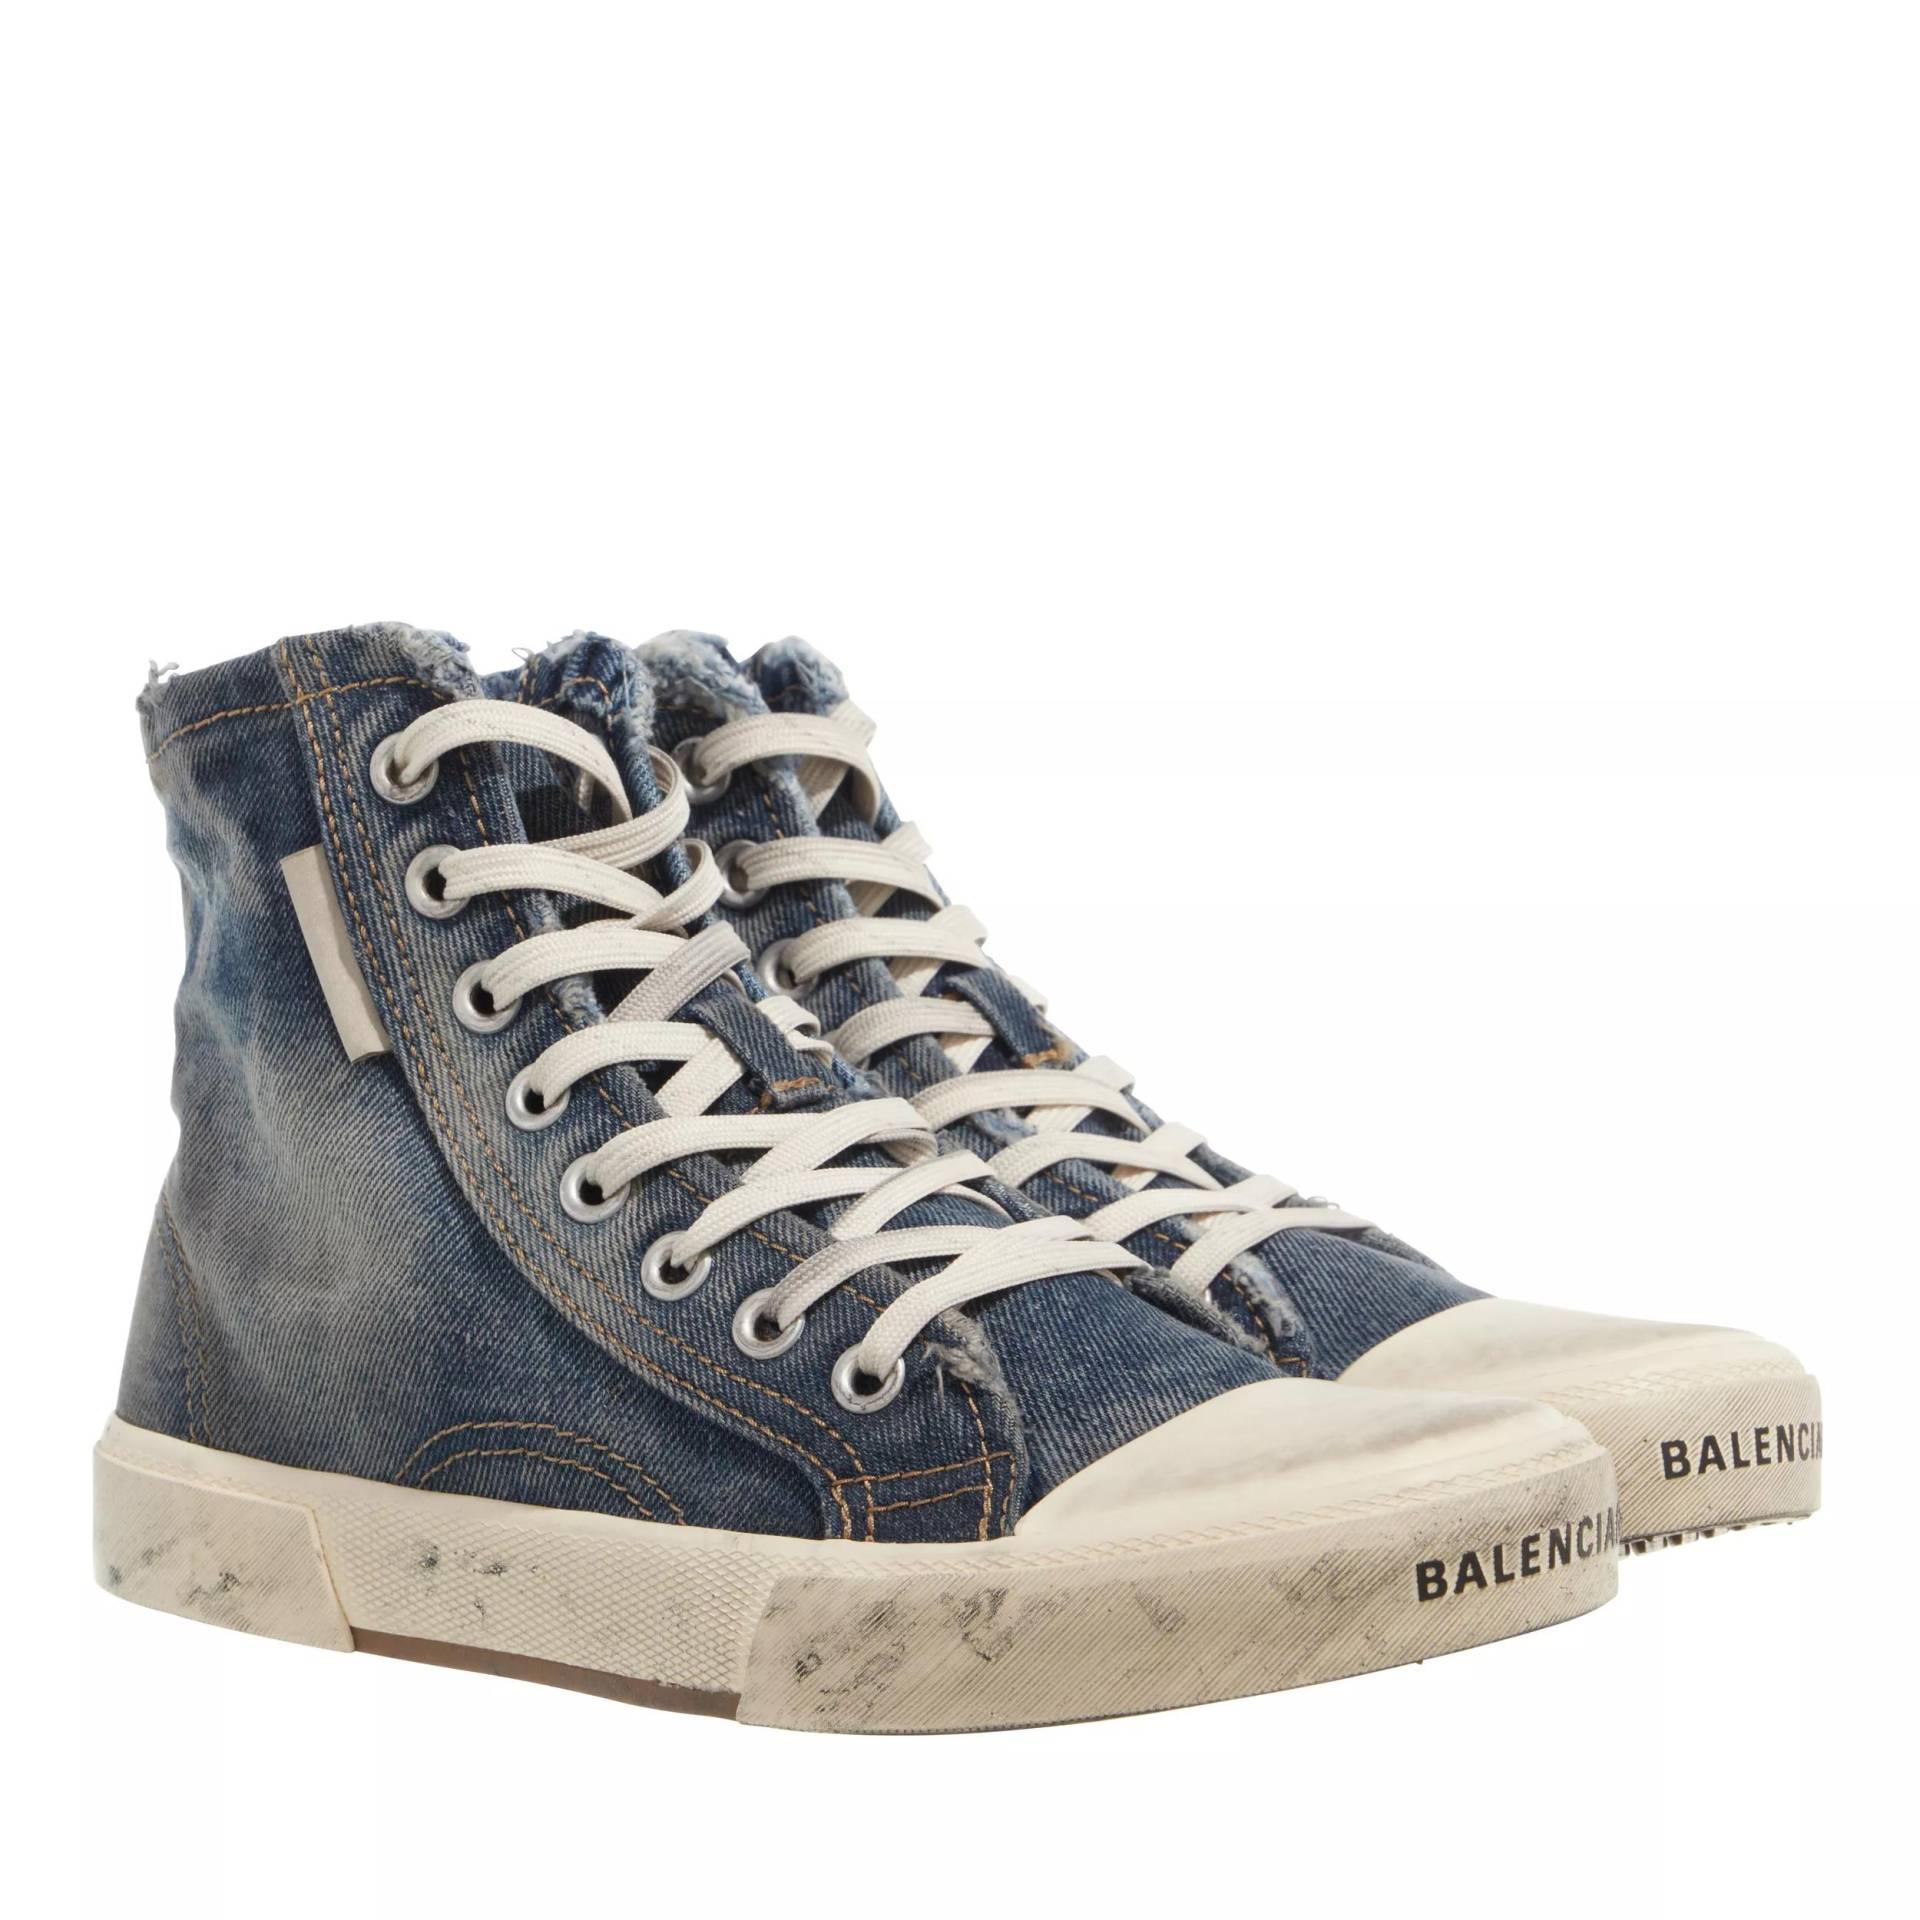 Balenciaga Sneakers - Paris High Top Sneakers - Gr. 36 (EU) - in Blau - für Damen von Balenciaga